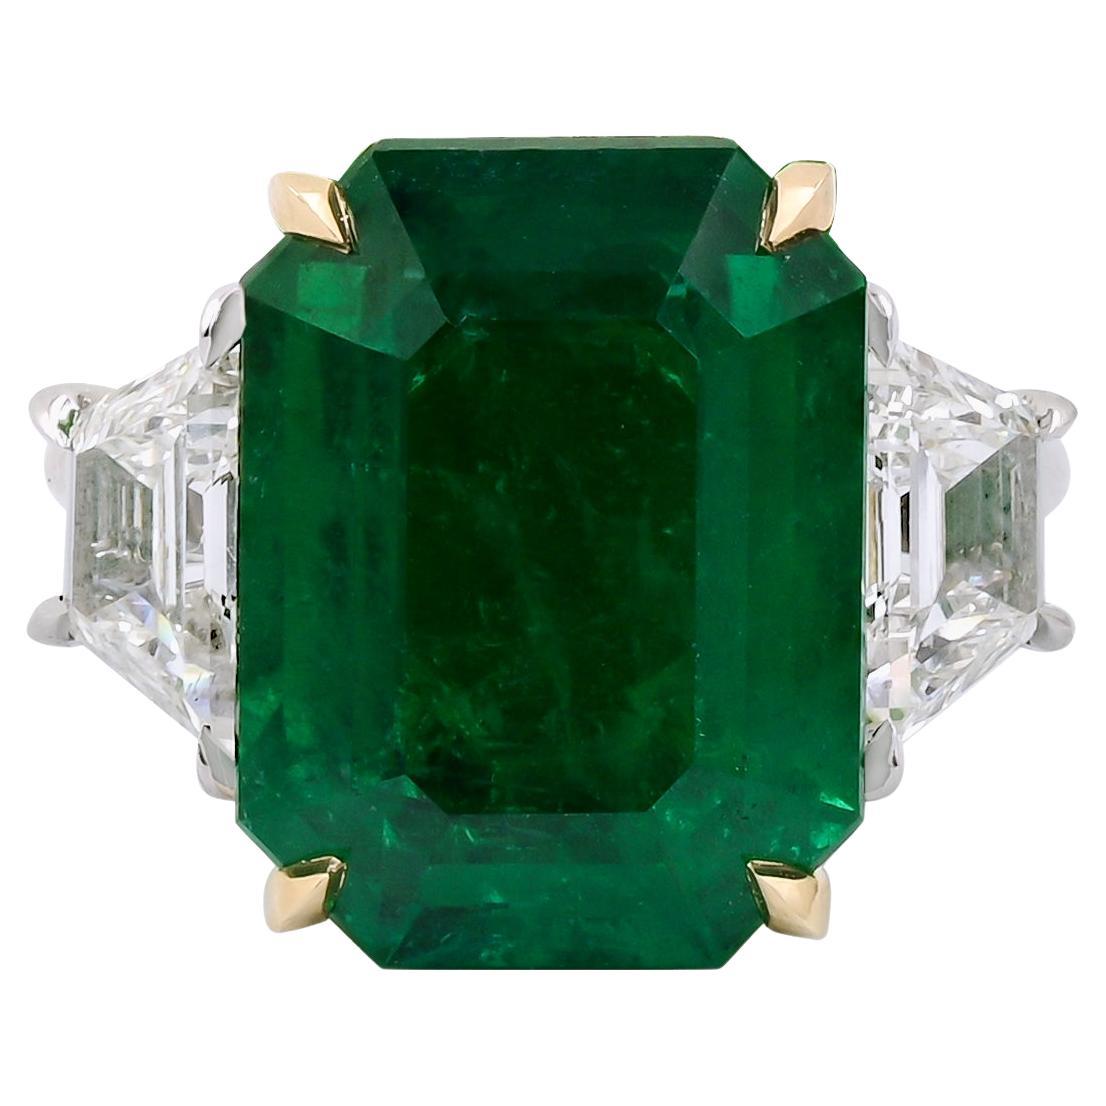 Spectra Fine Jewelry 11.68 Carat Zambian Emerald Diamond Ring